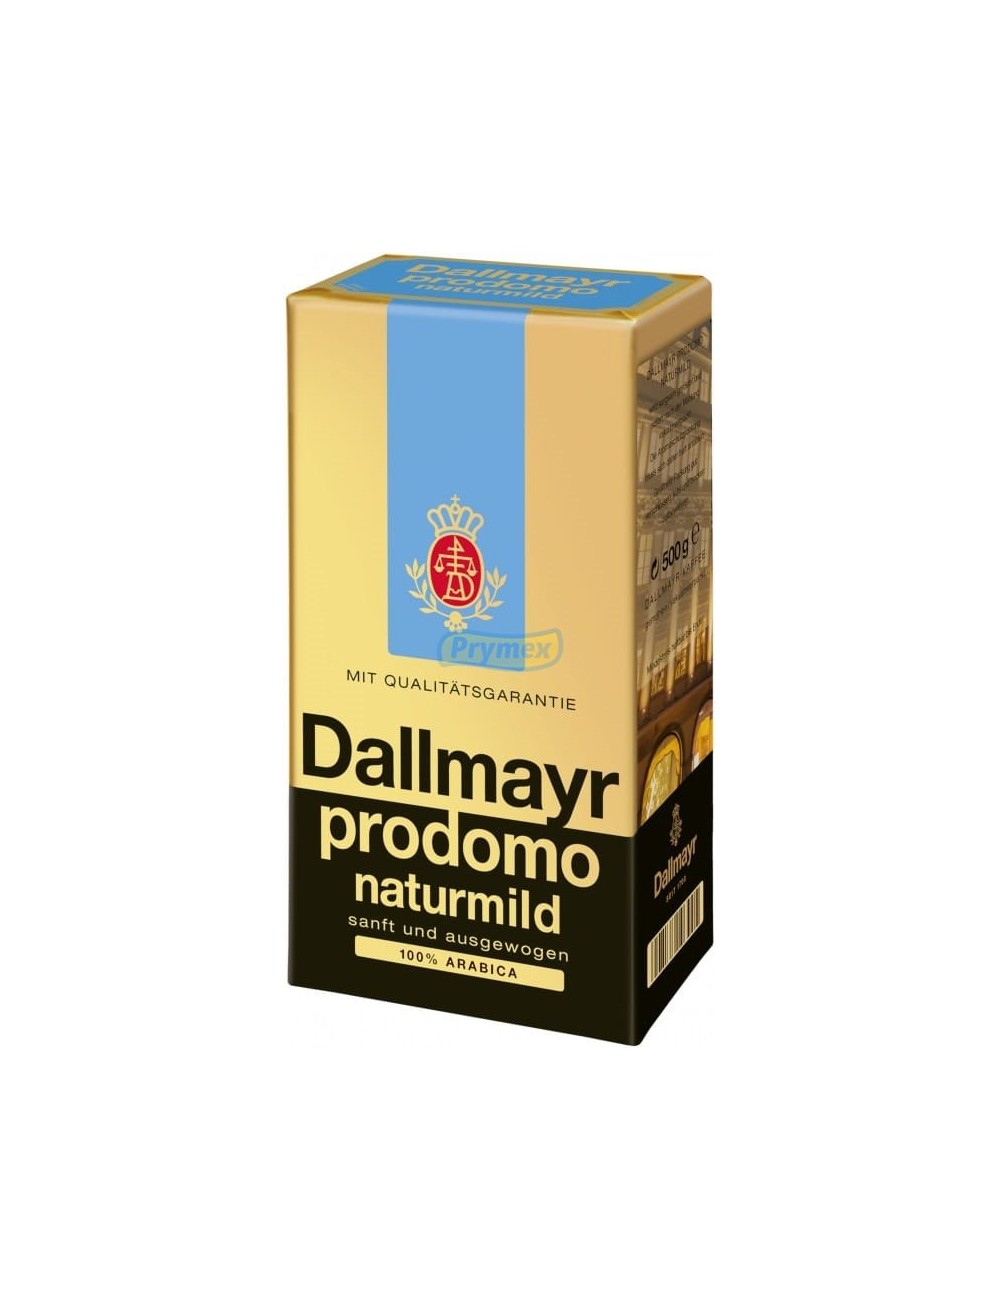 Dallmayr Kawa Mielona Arabika Prodomo Naturmild 500 g (DE)